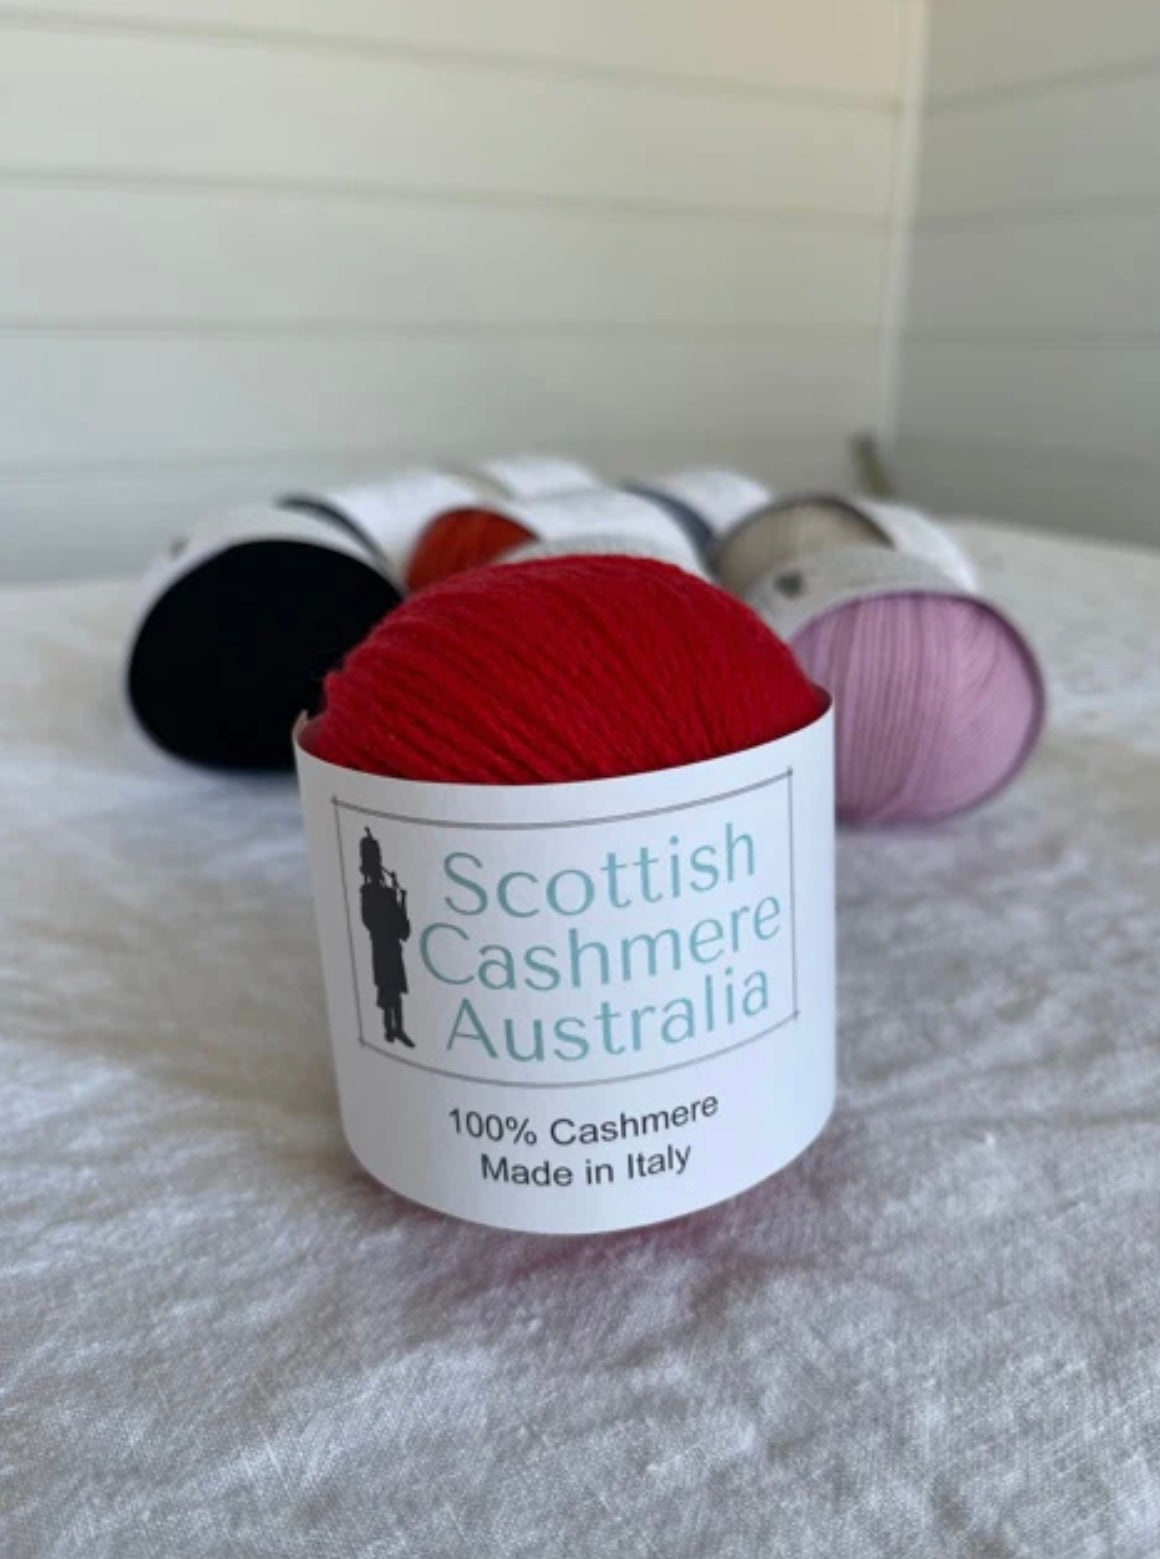 Cashmere hand-warmer crocheting kit